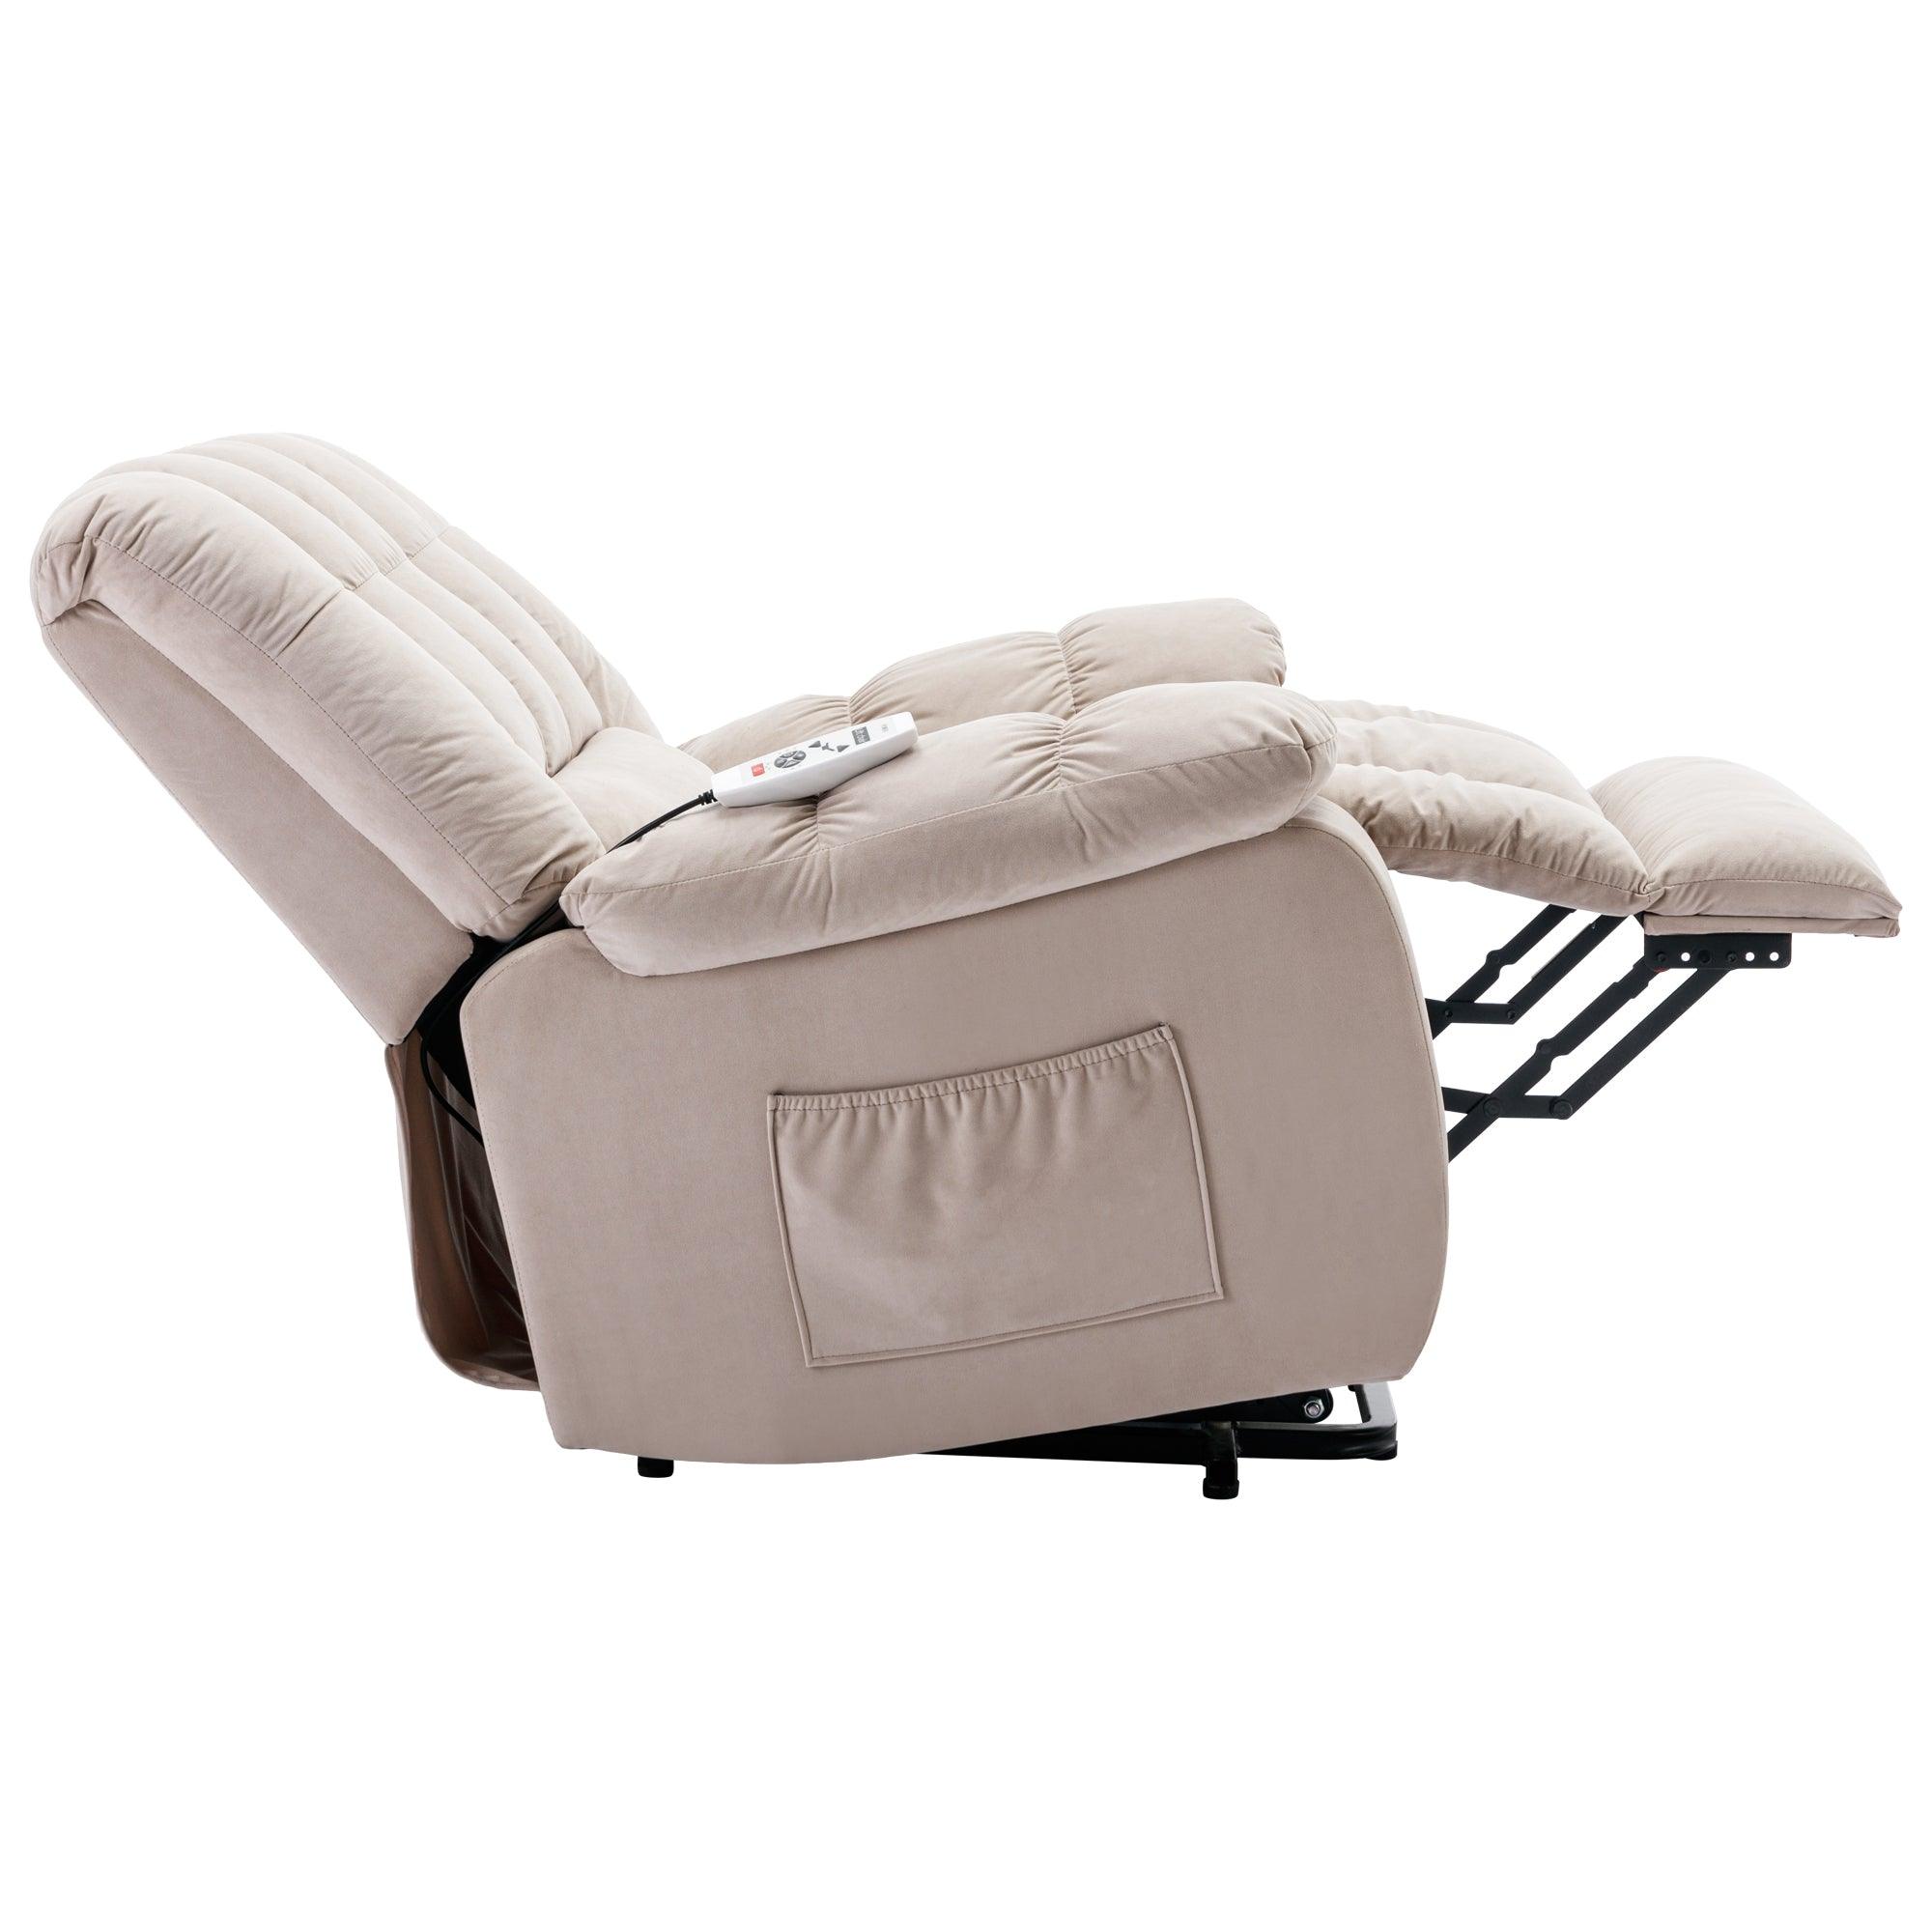 Beige Massage Lift Chair Recliner, side view reclined